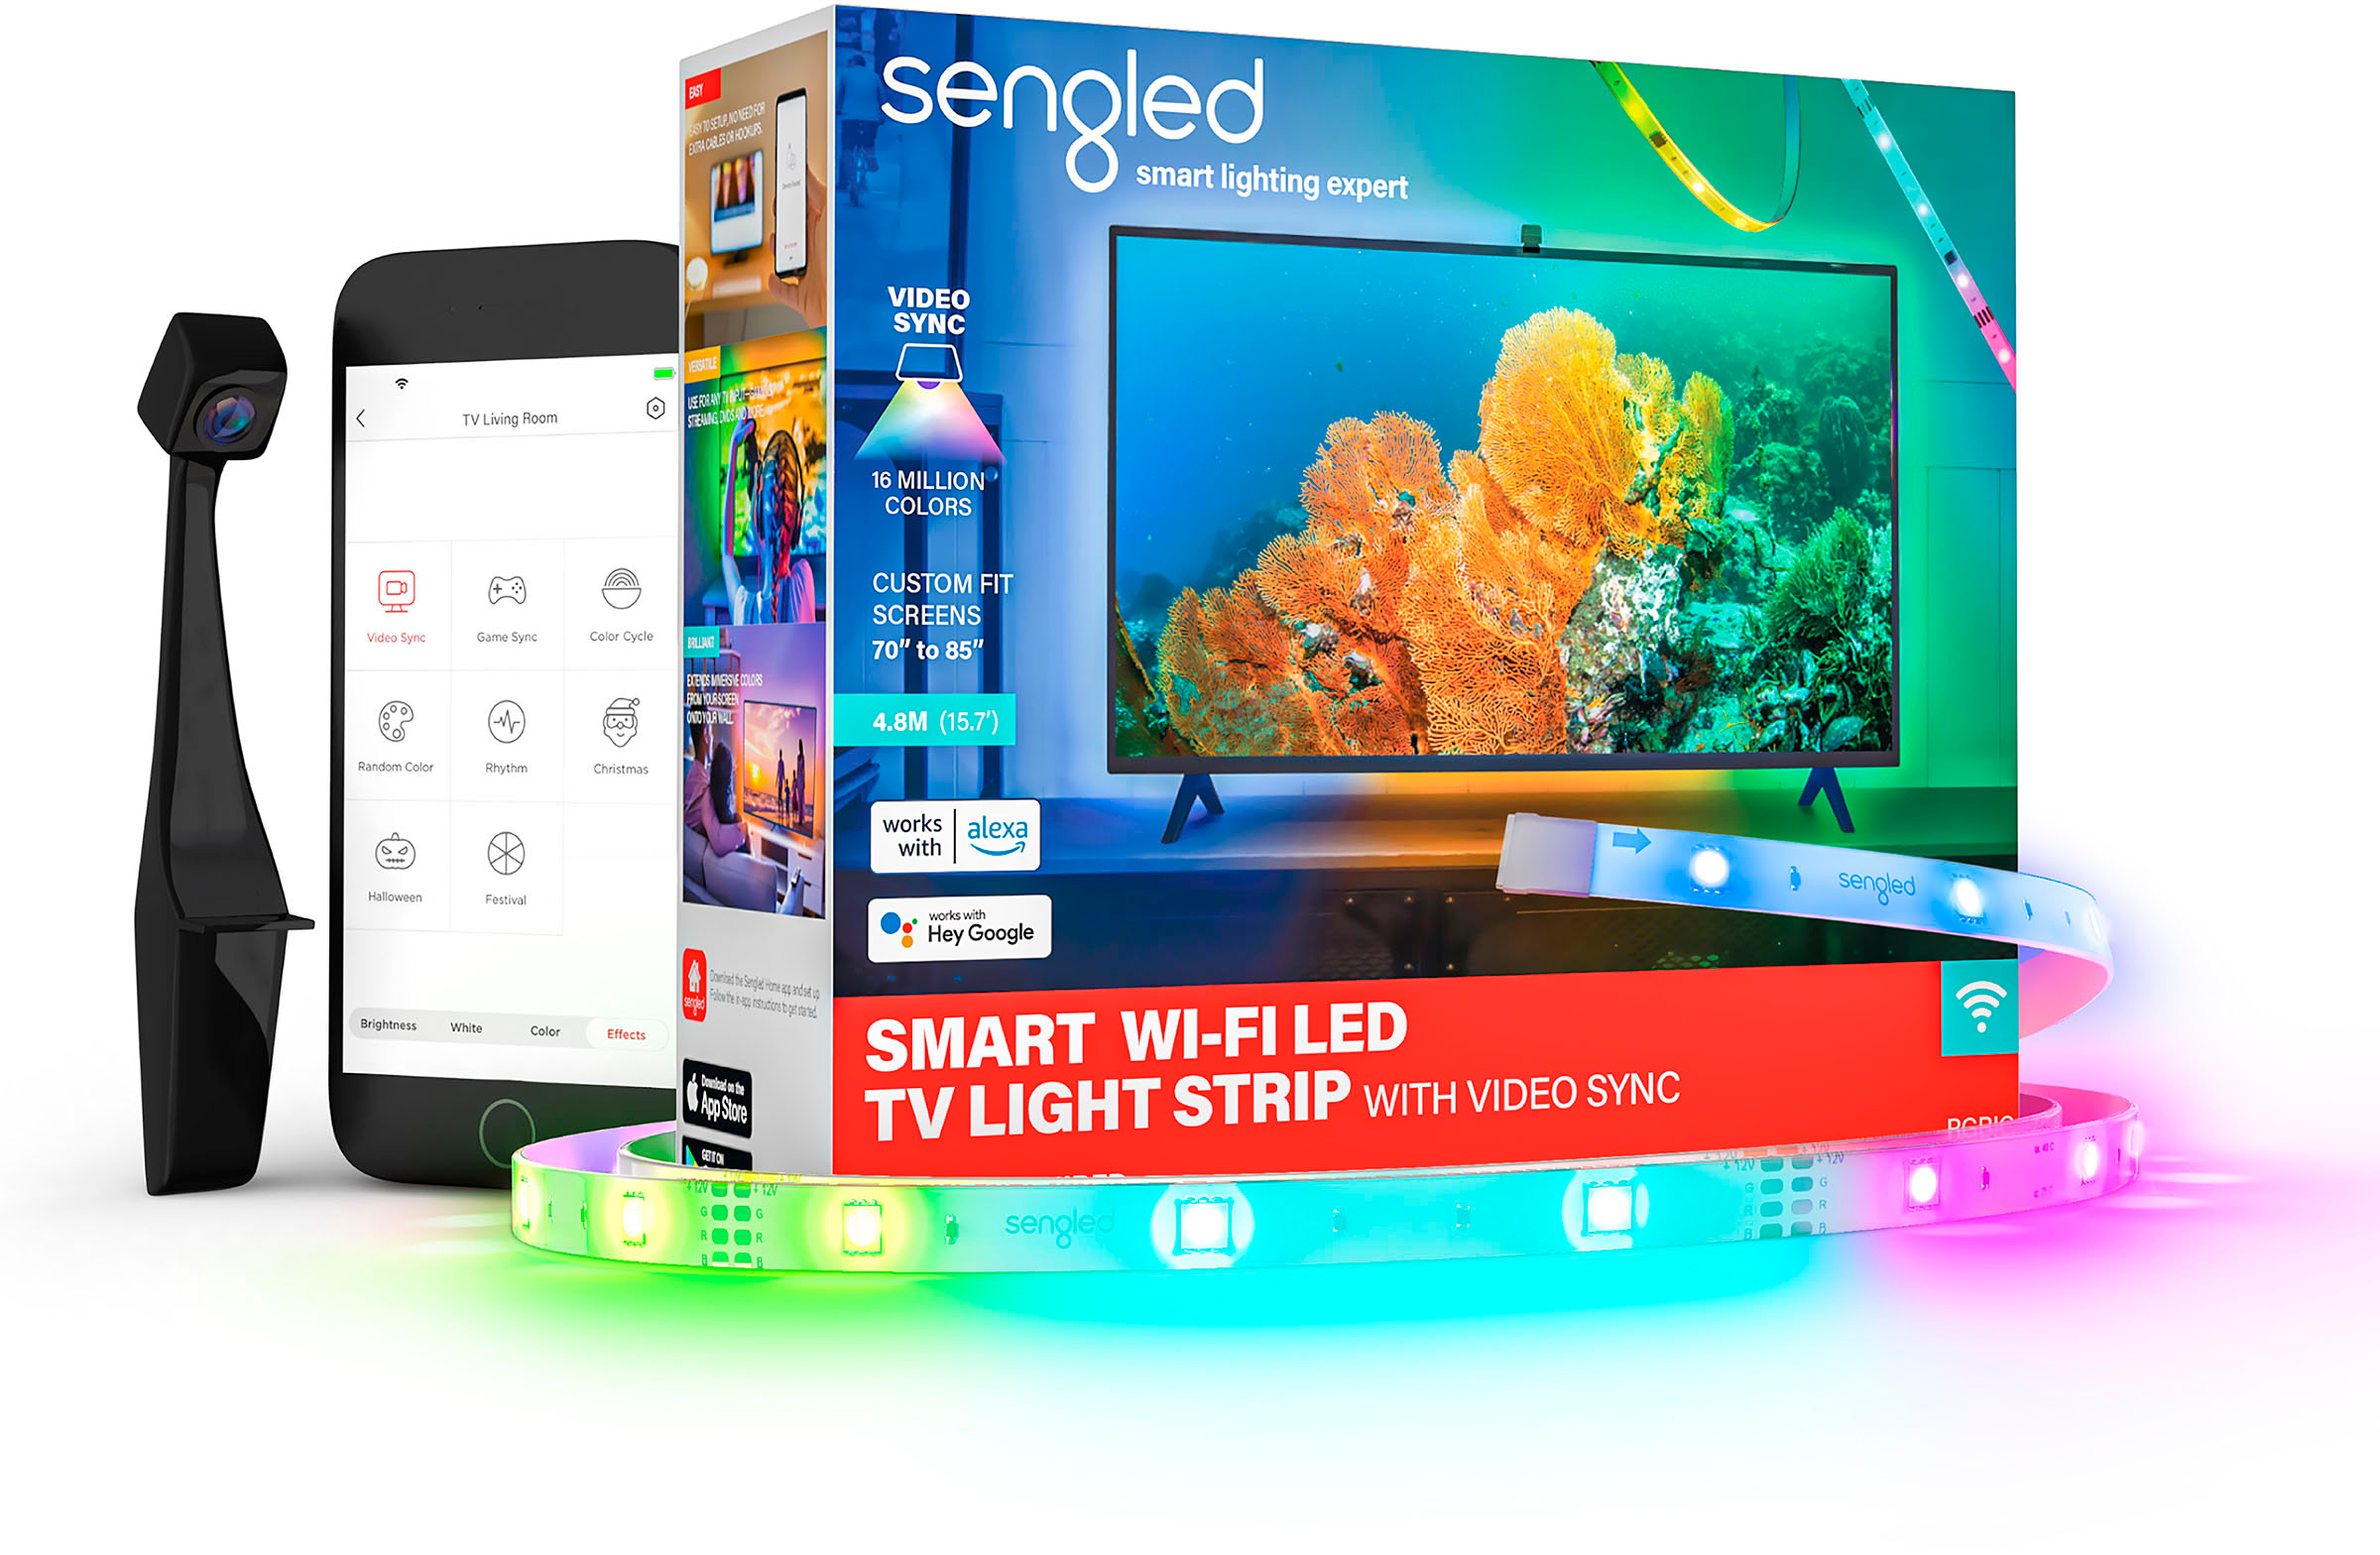 Sengled Smart Wi-Fi LED Multicolor Review